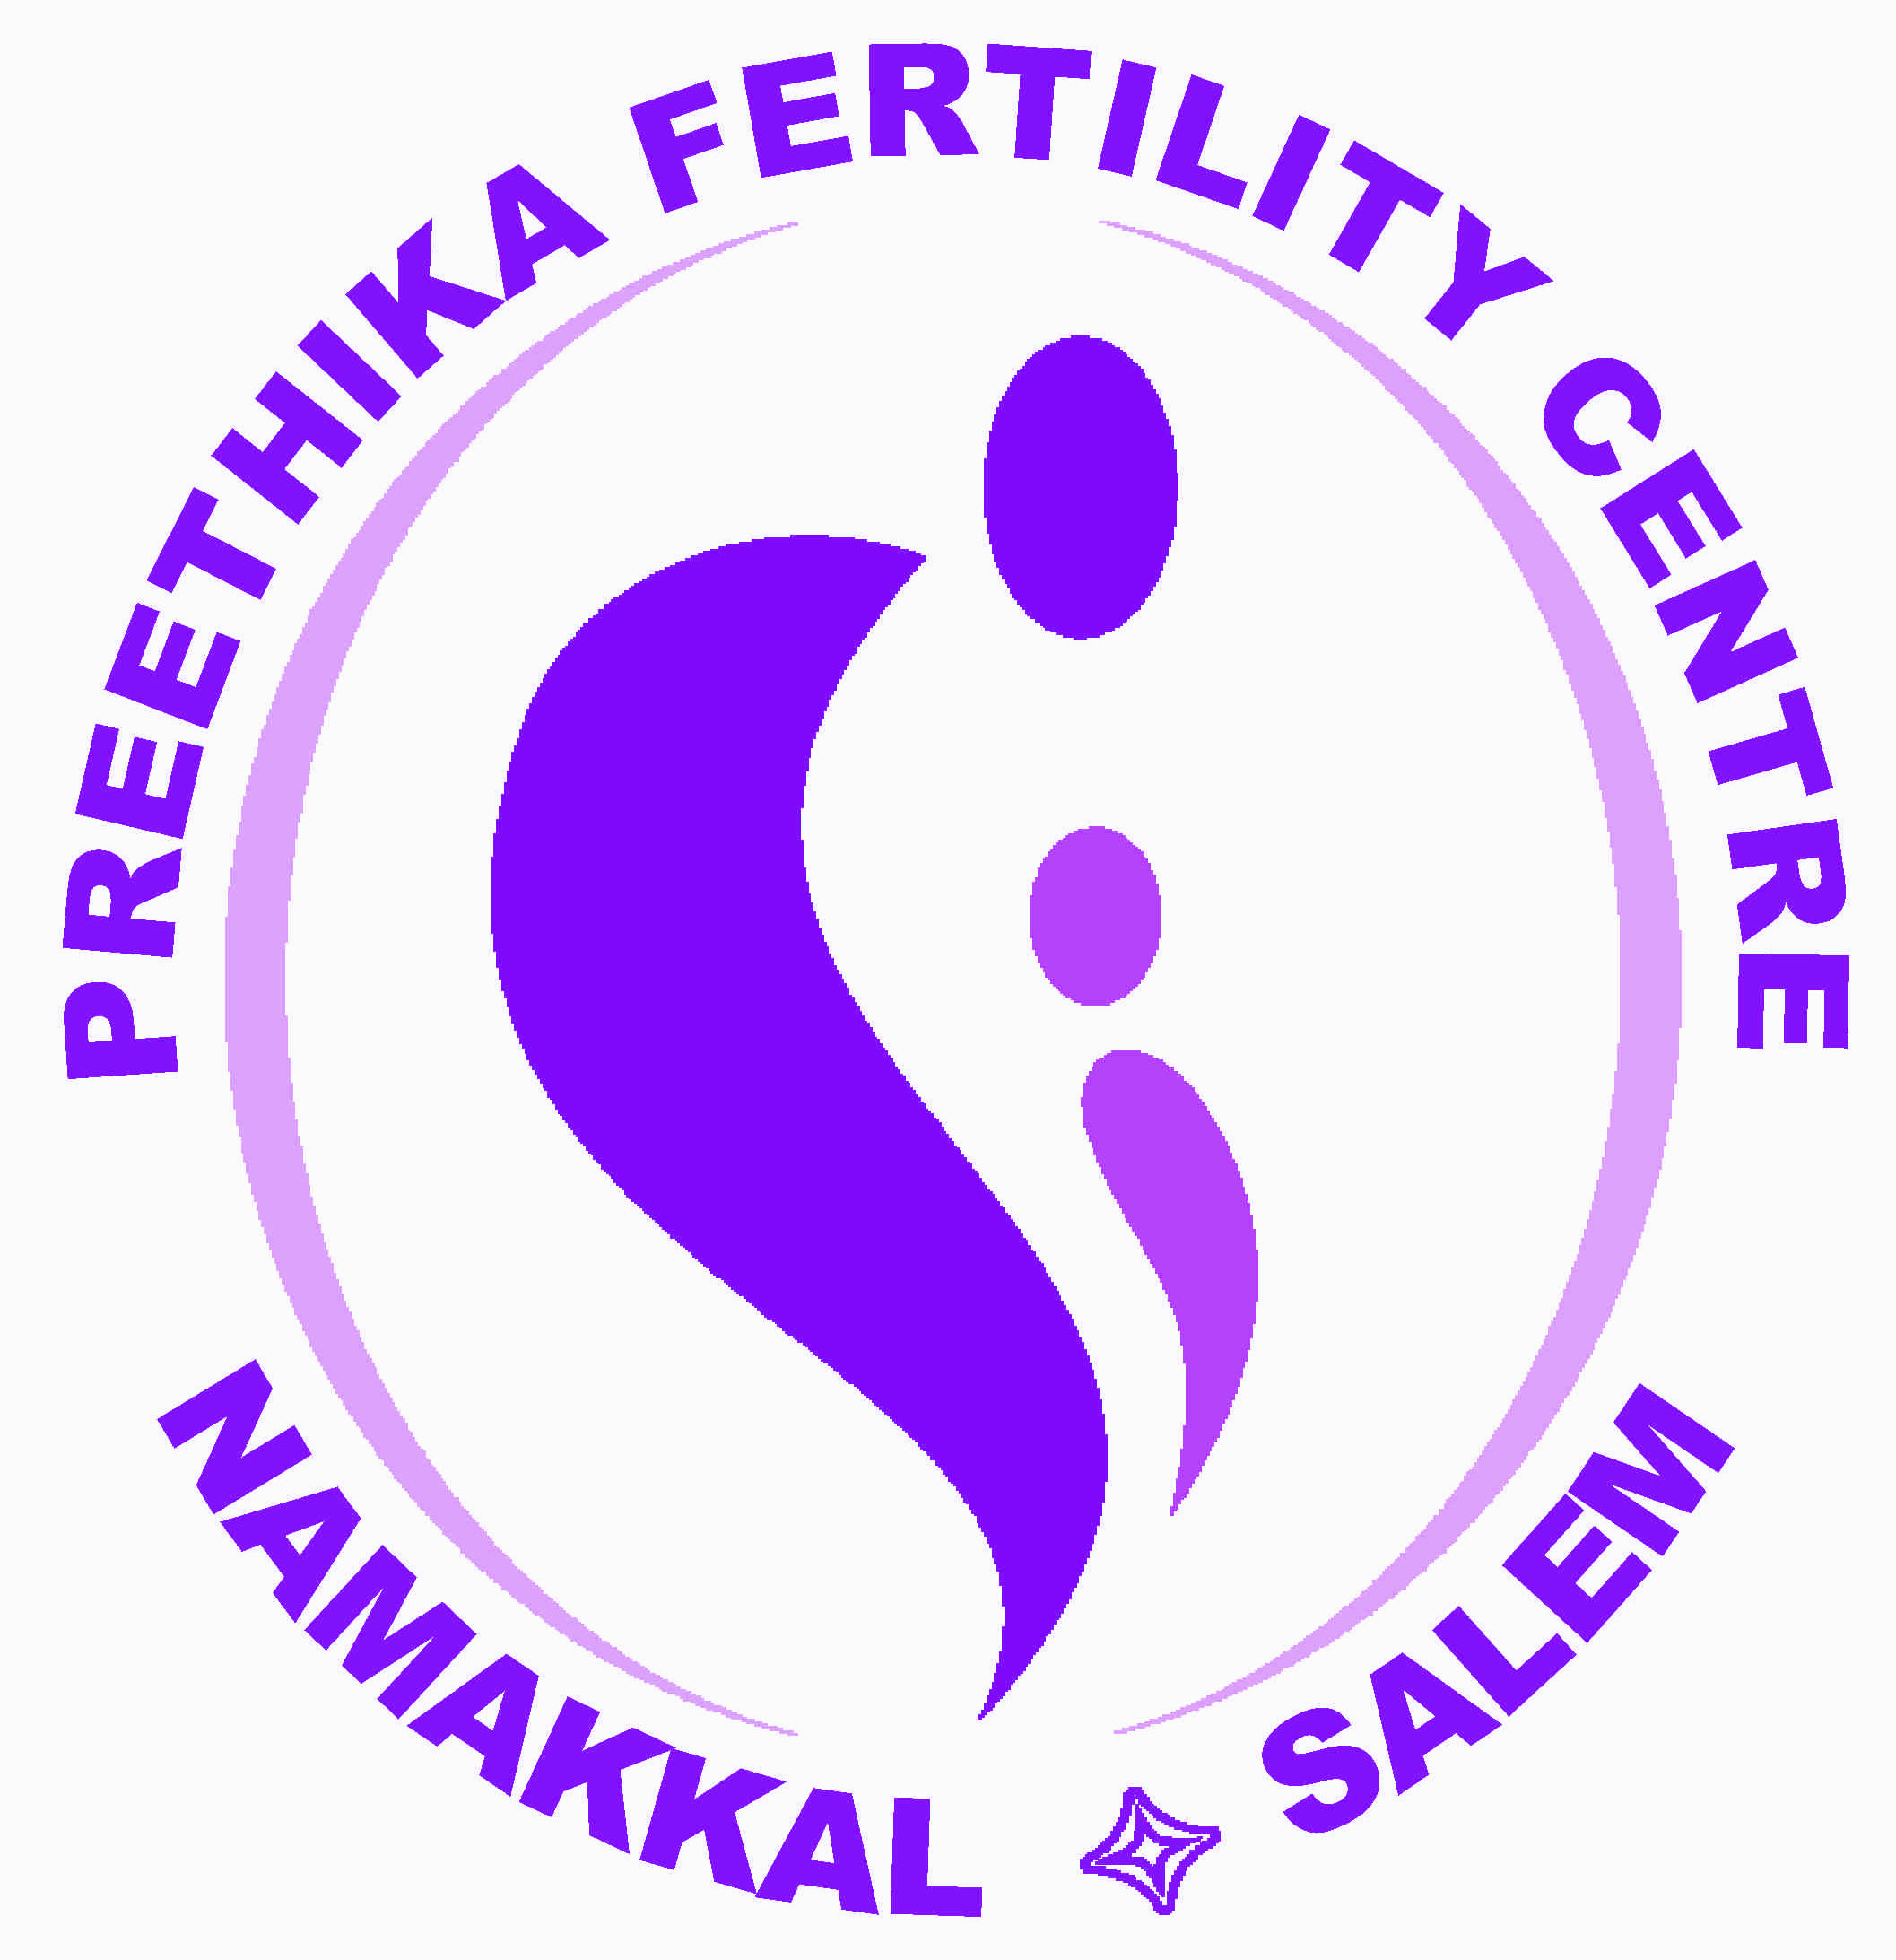 Preethika Fertility Center|Hospitals|Medical Services